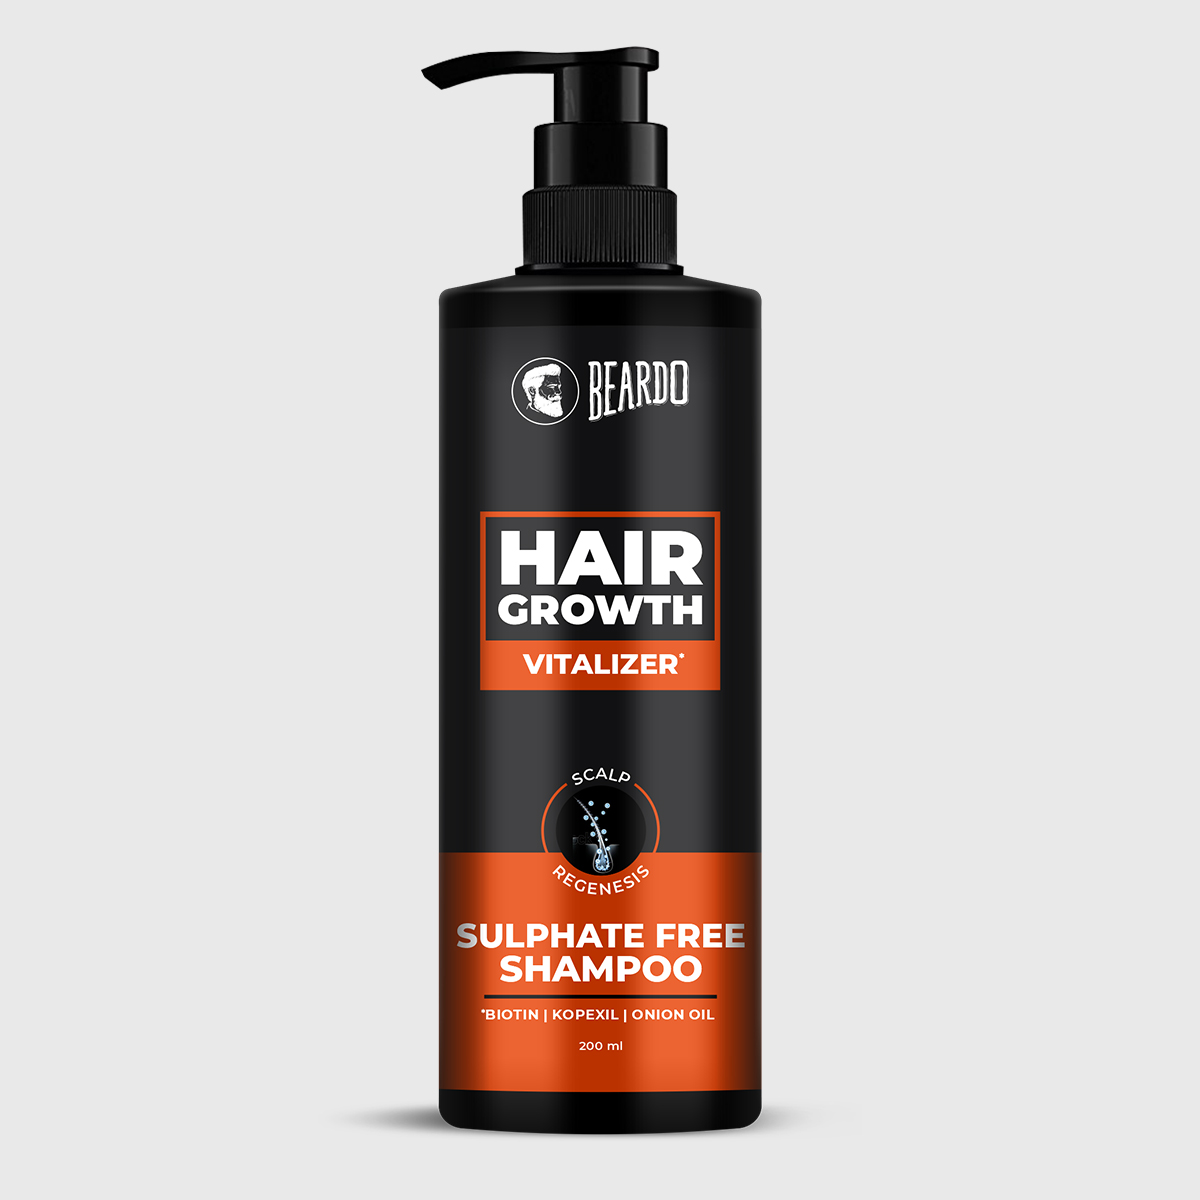 Beardo Hair Growth Sulphate Free Shampoo coupon code